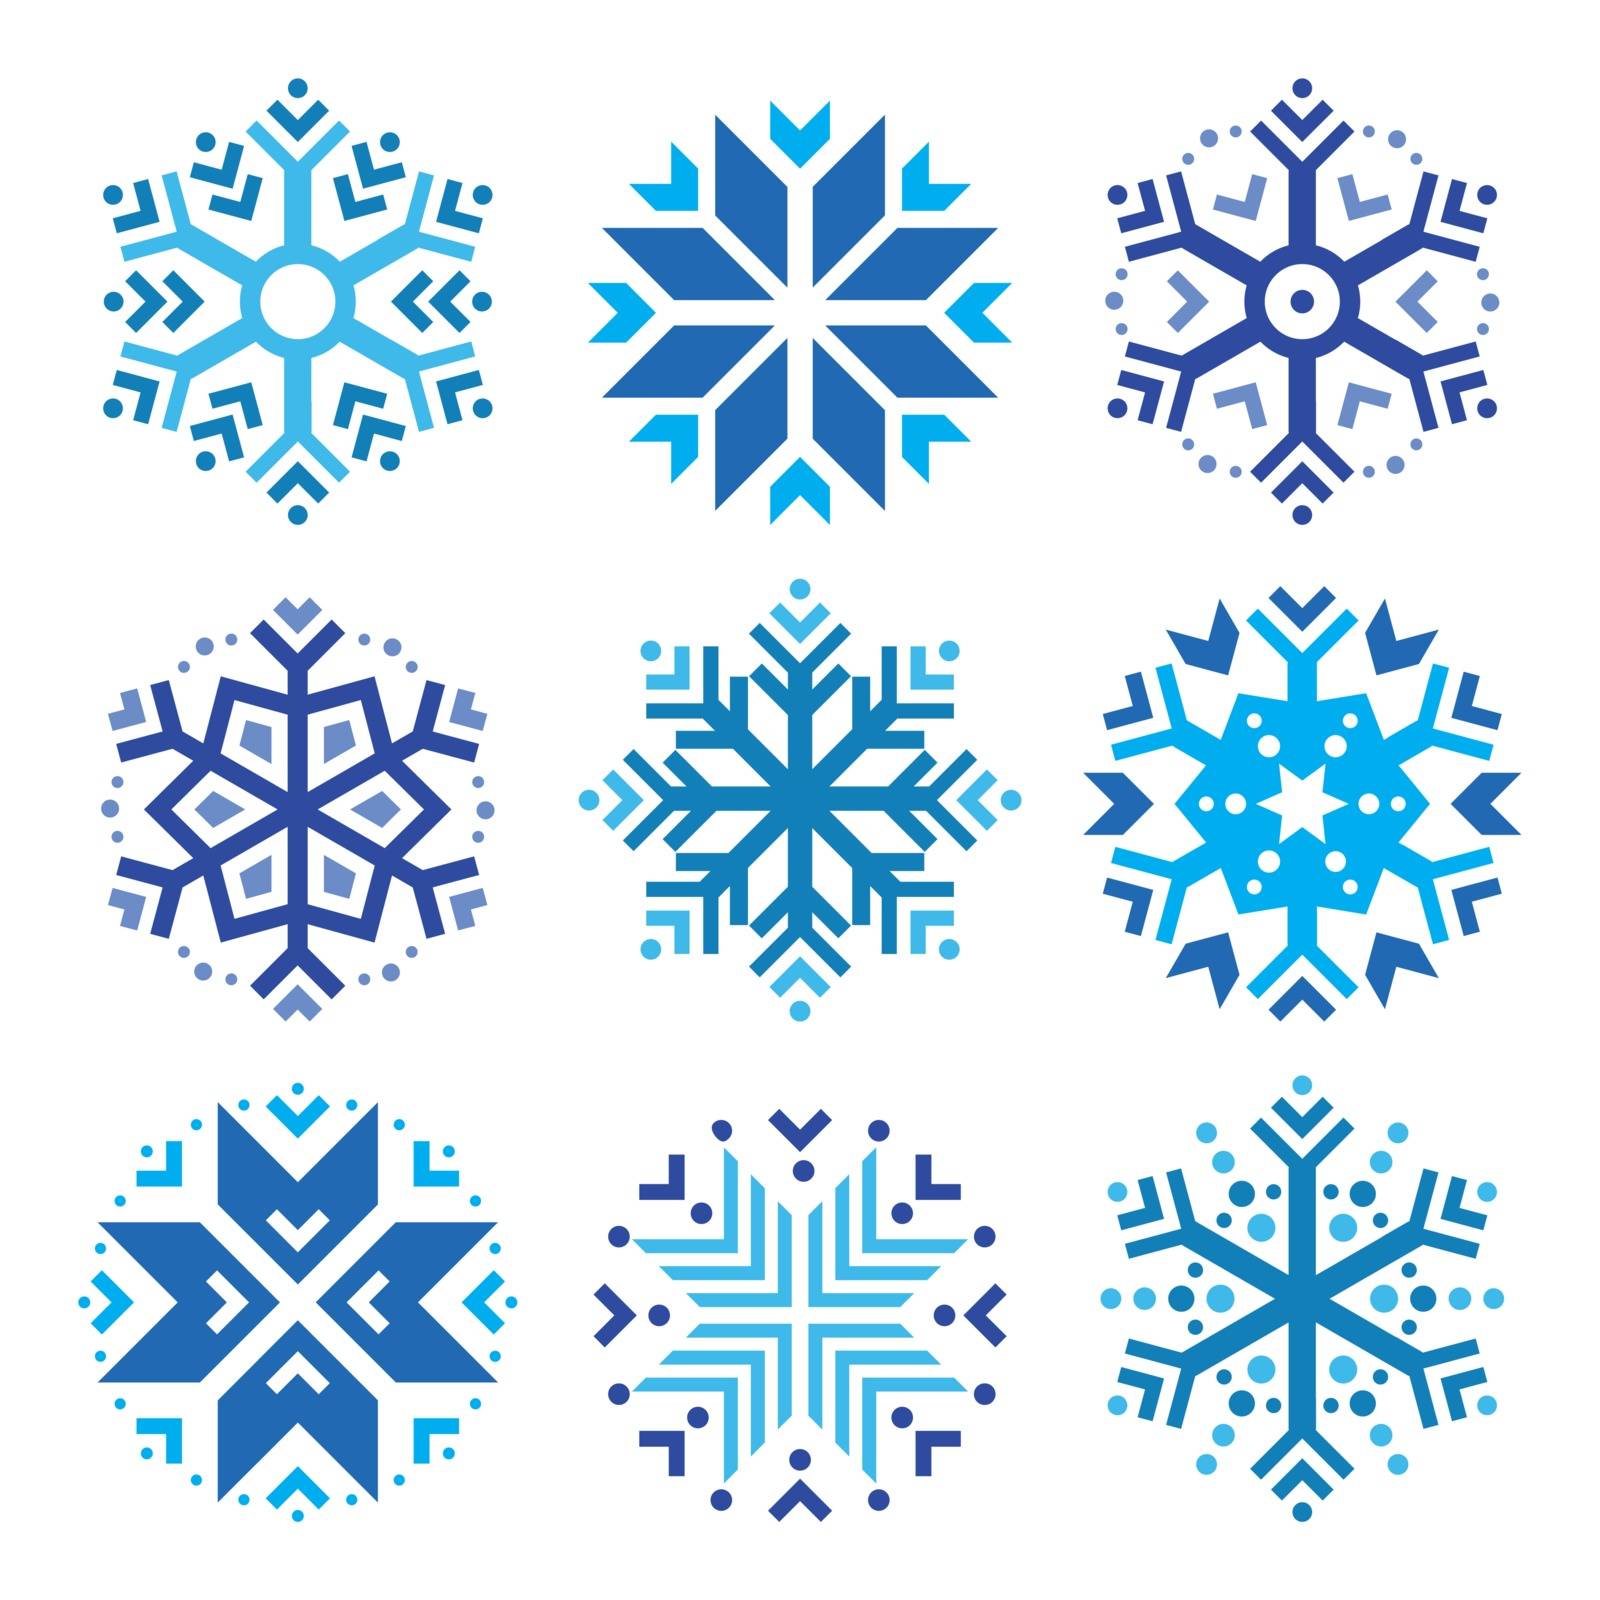 Snowflakes, winter blue icons set by RedKoala